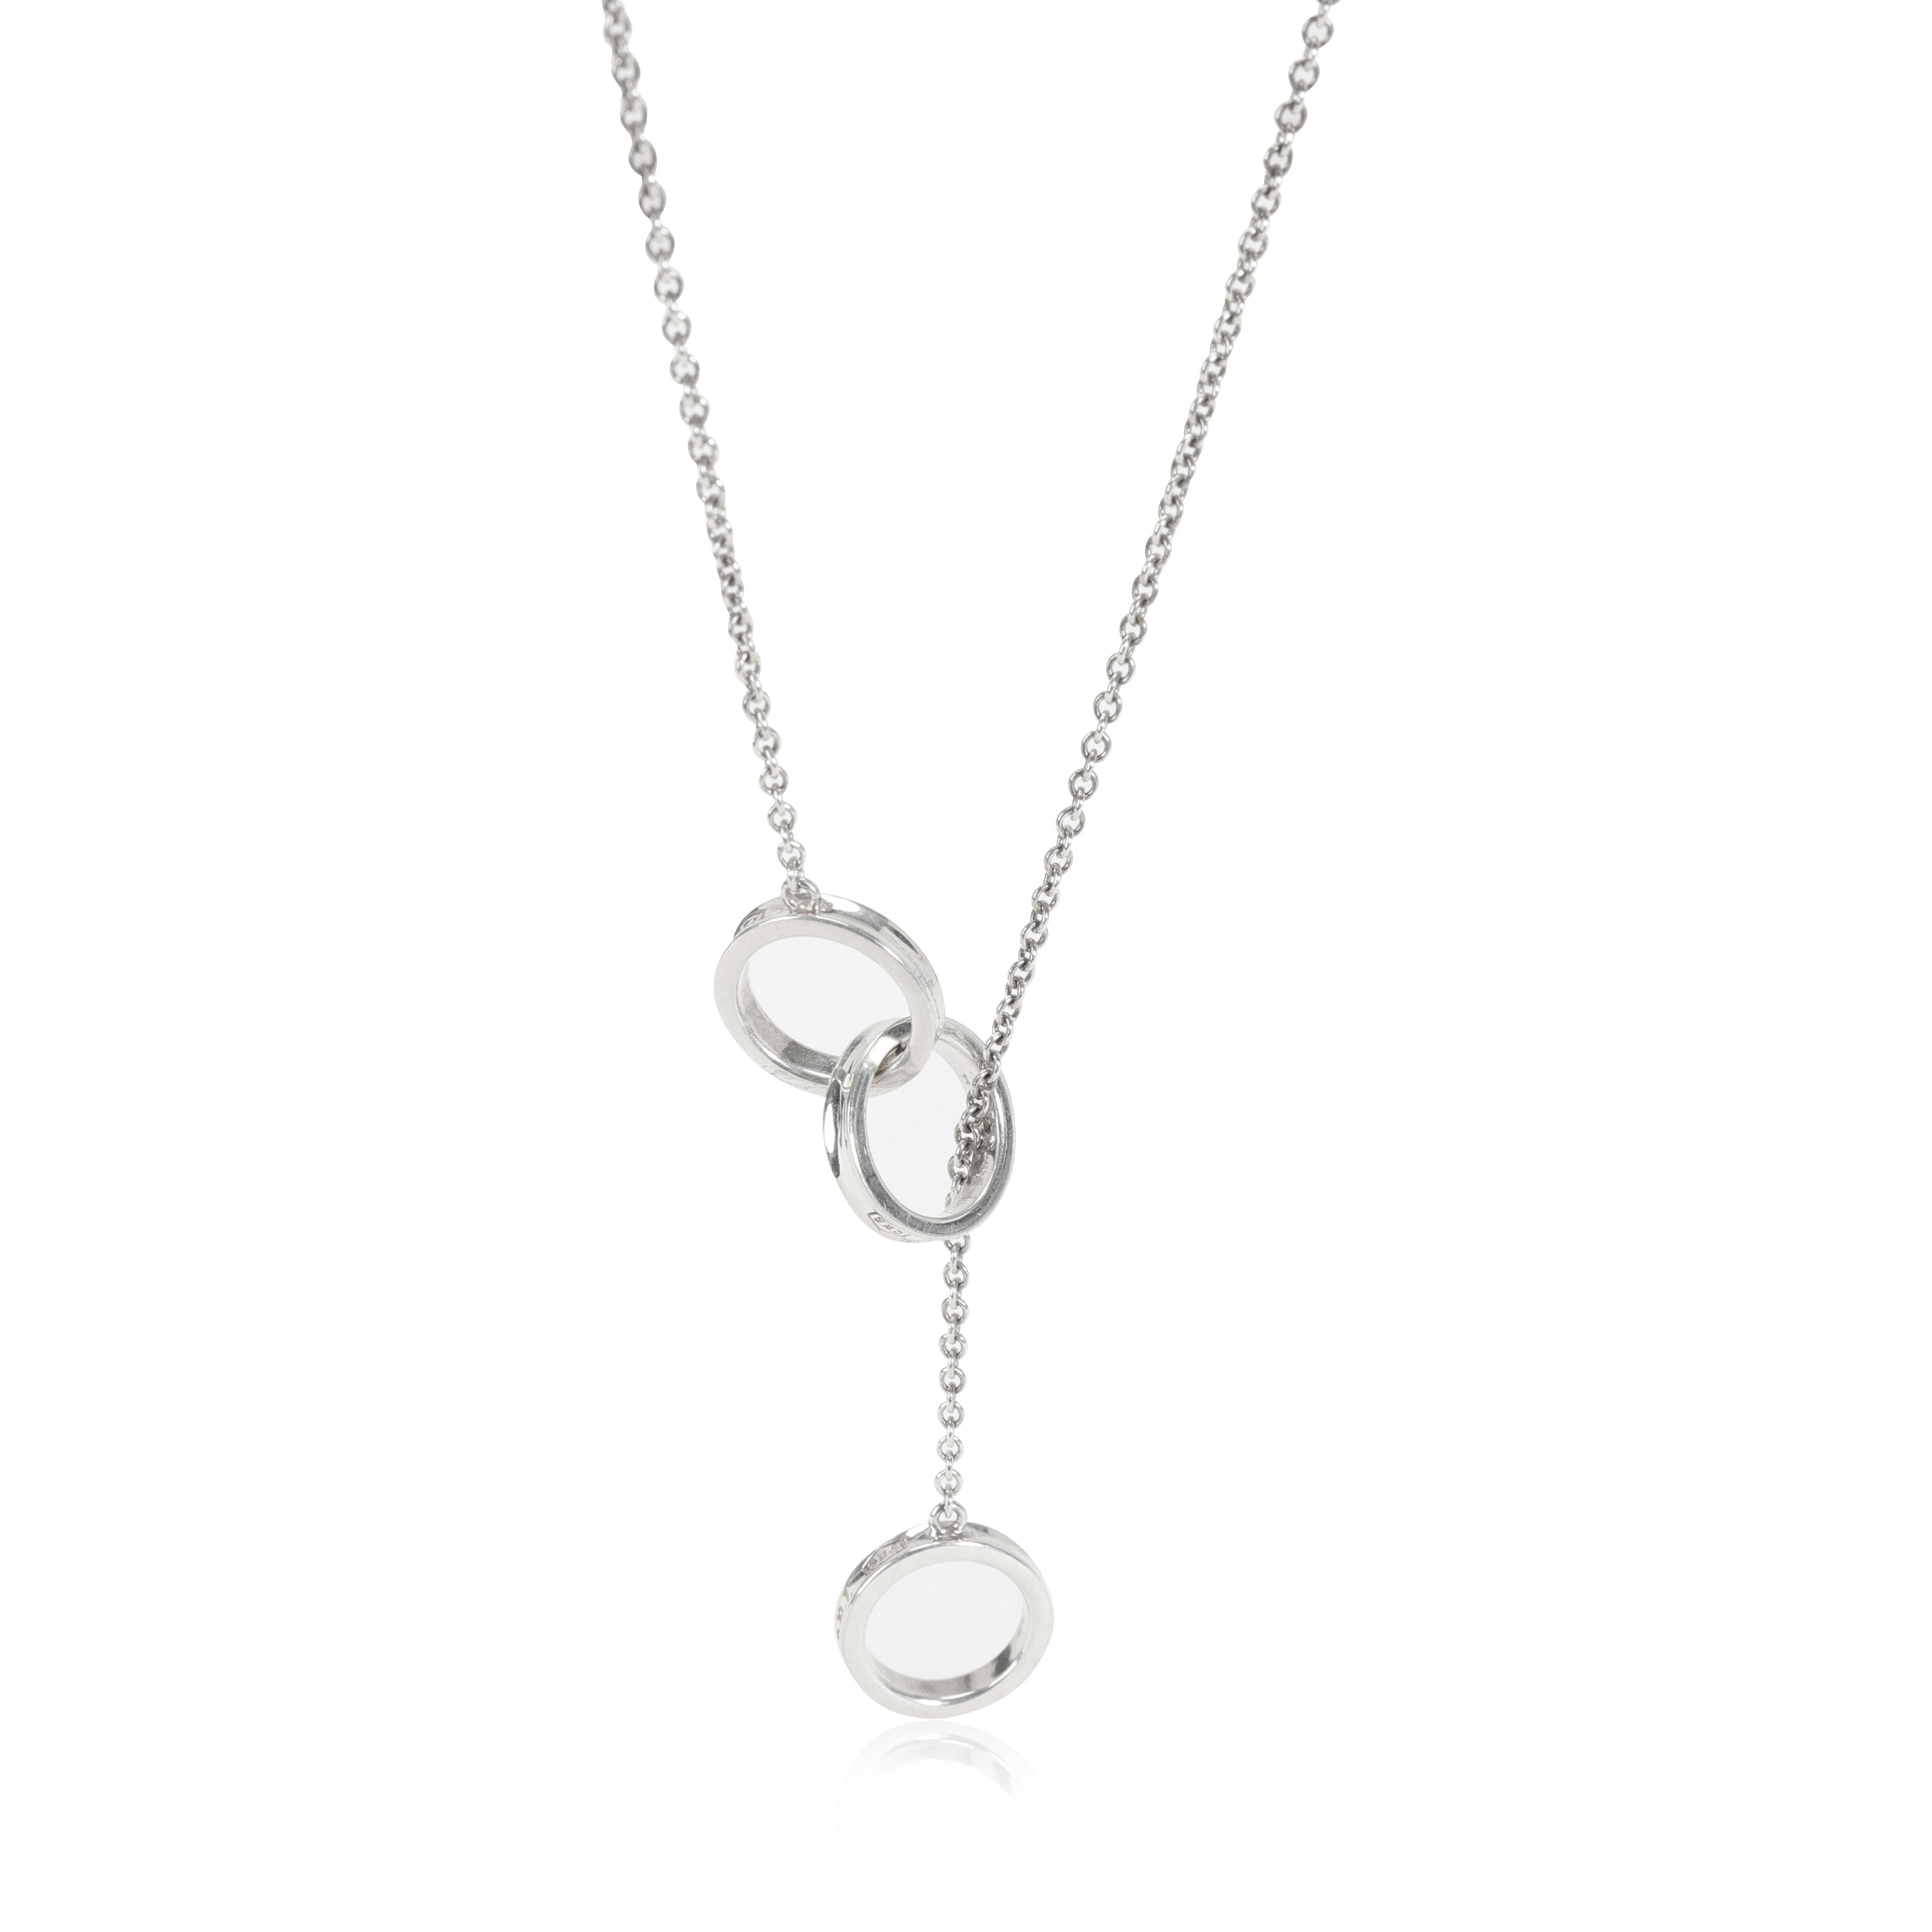 Tiffany & Co 1837 Interlocking Circles Necklace Pendant Chain Gift Pouch 17  Inch | Pretty jewelry necklaces, Tiffany & co., Interlocking circle necklace